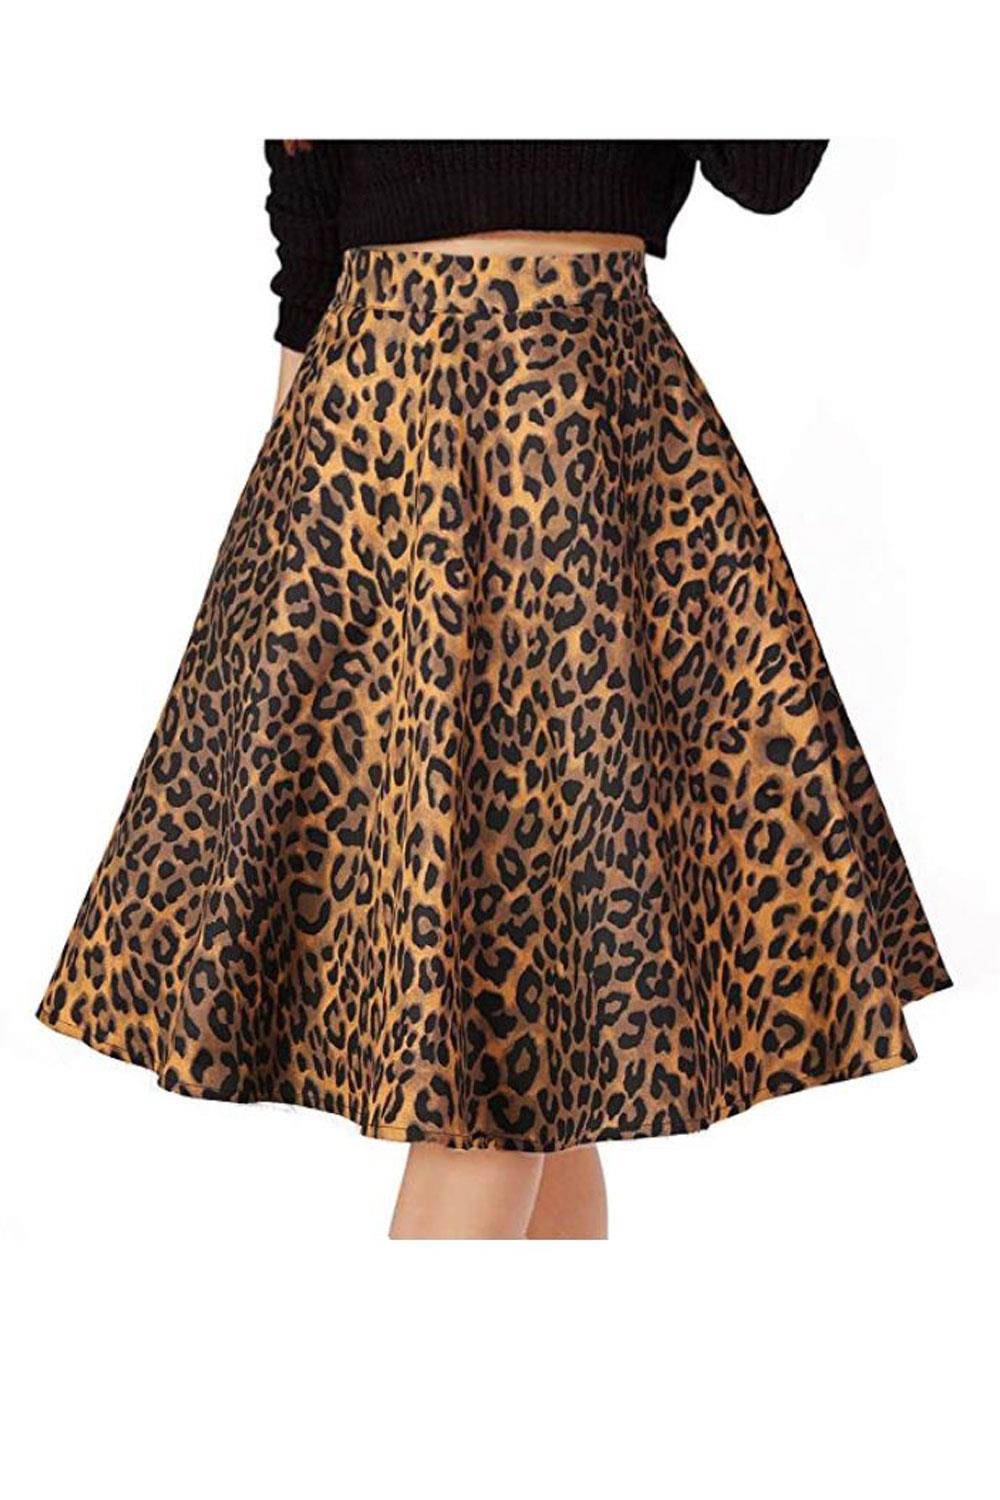 falda leopardo amazon Musever, 22€ aprox.